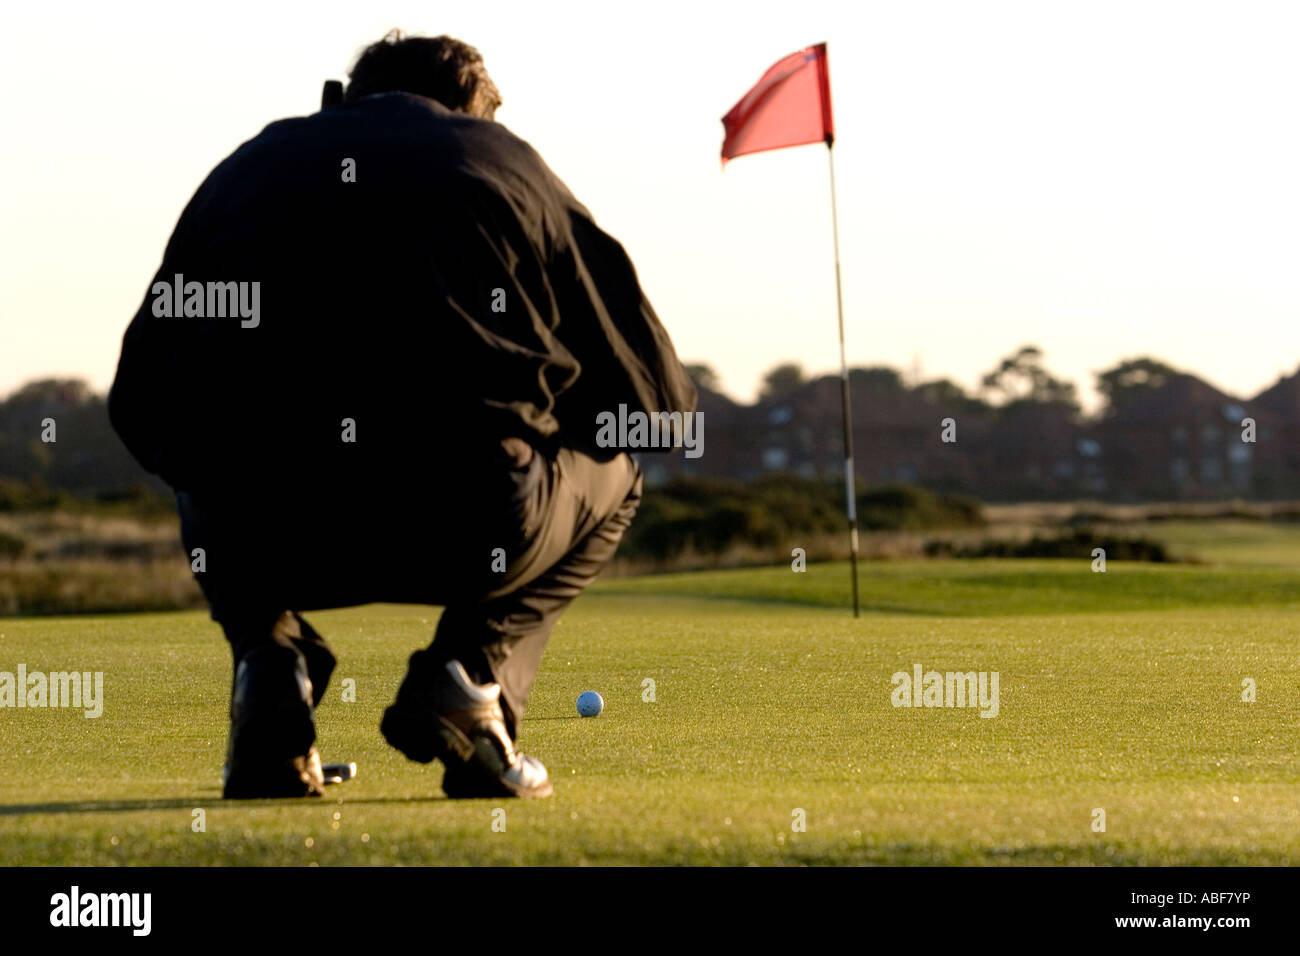 Golfer lining up putt. Stock Photo